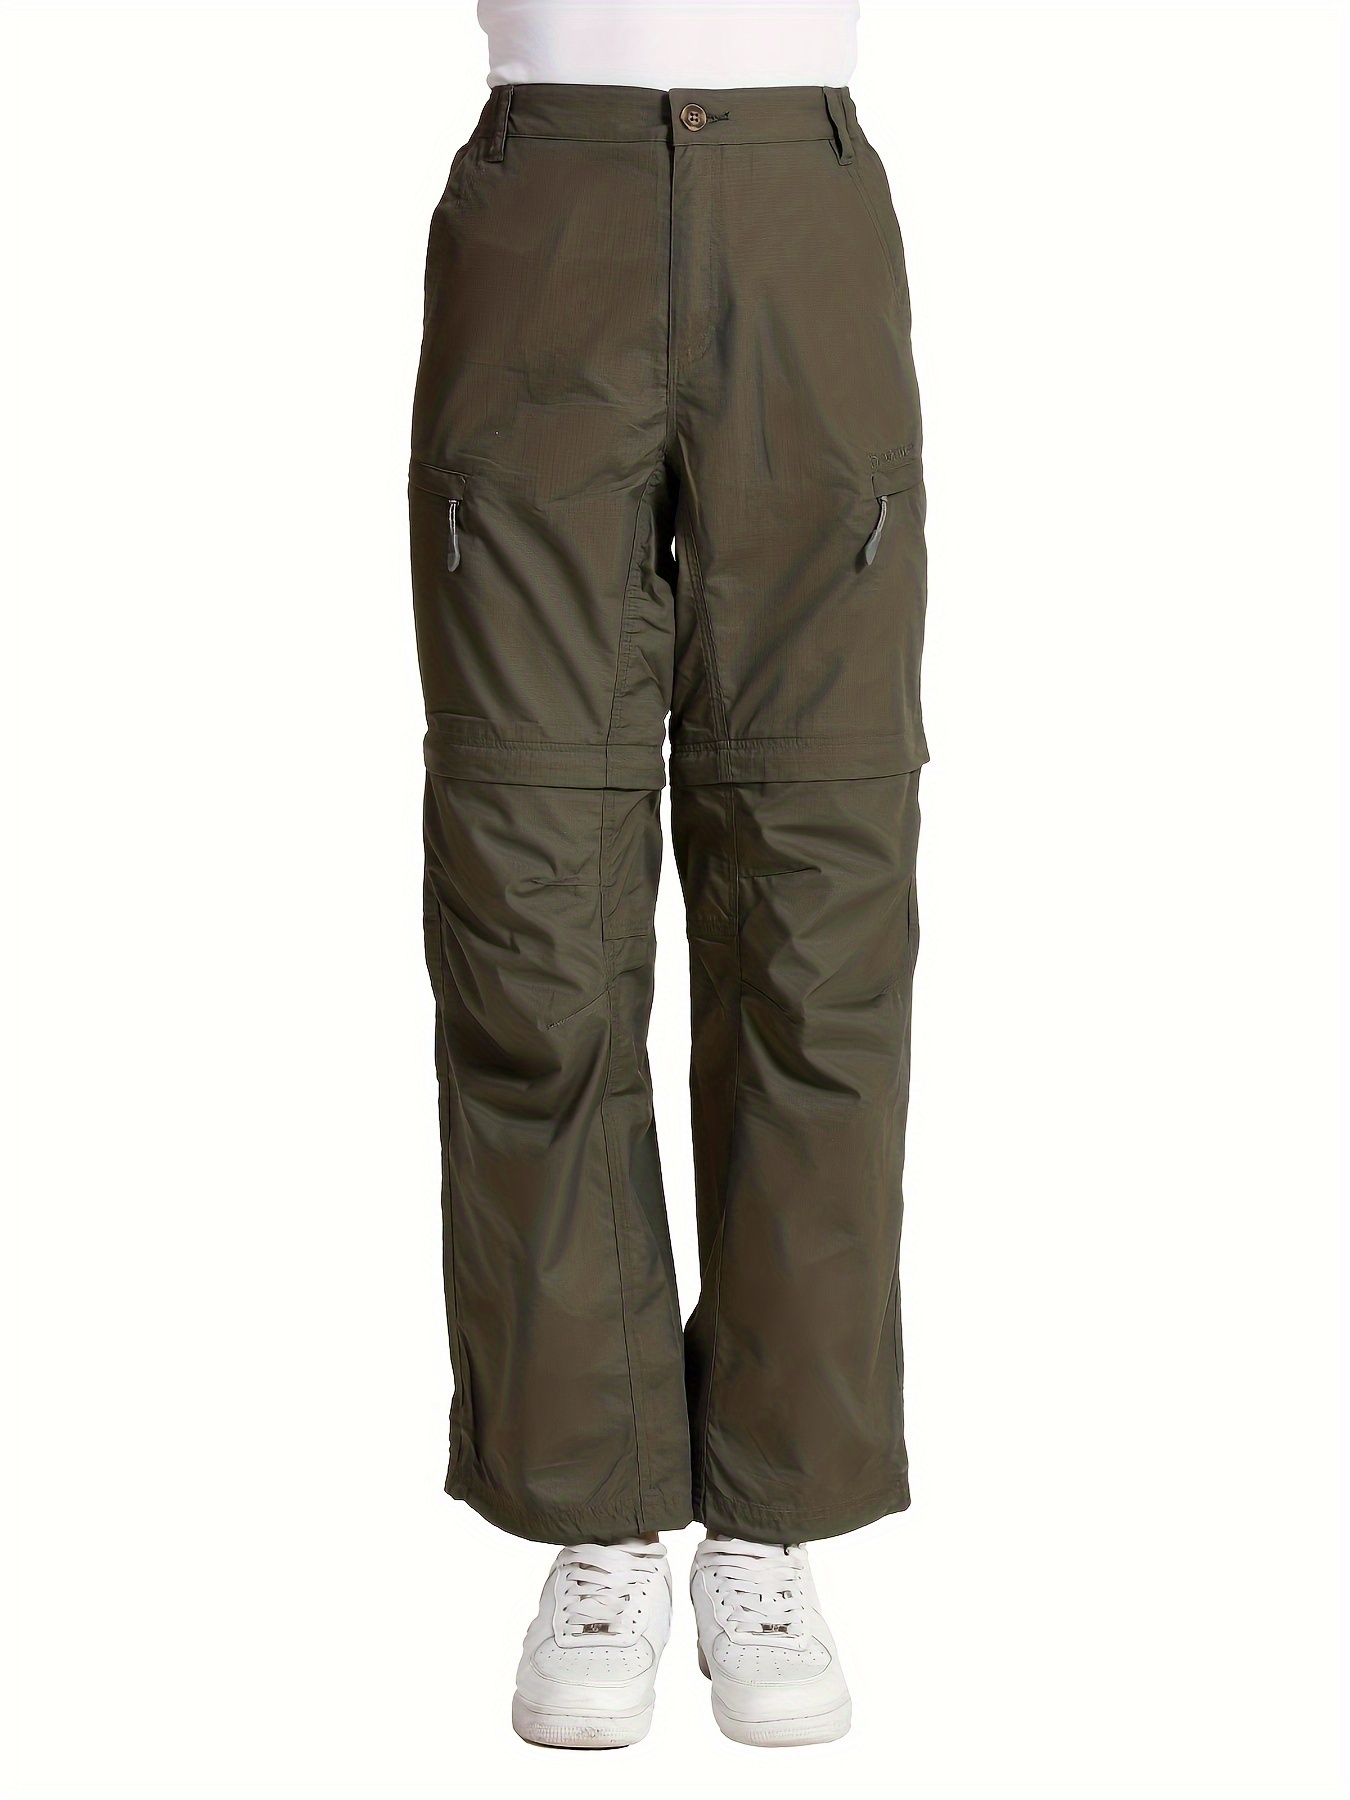 Women's Green Cargo Pants, Khaki Combat Pants